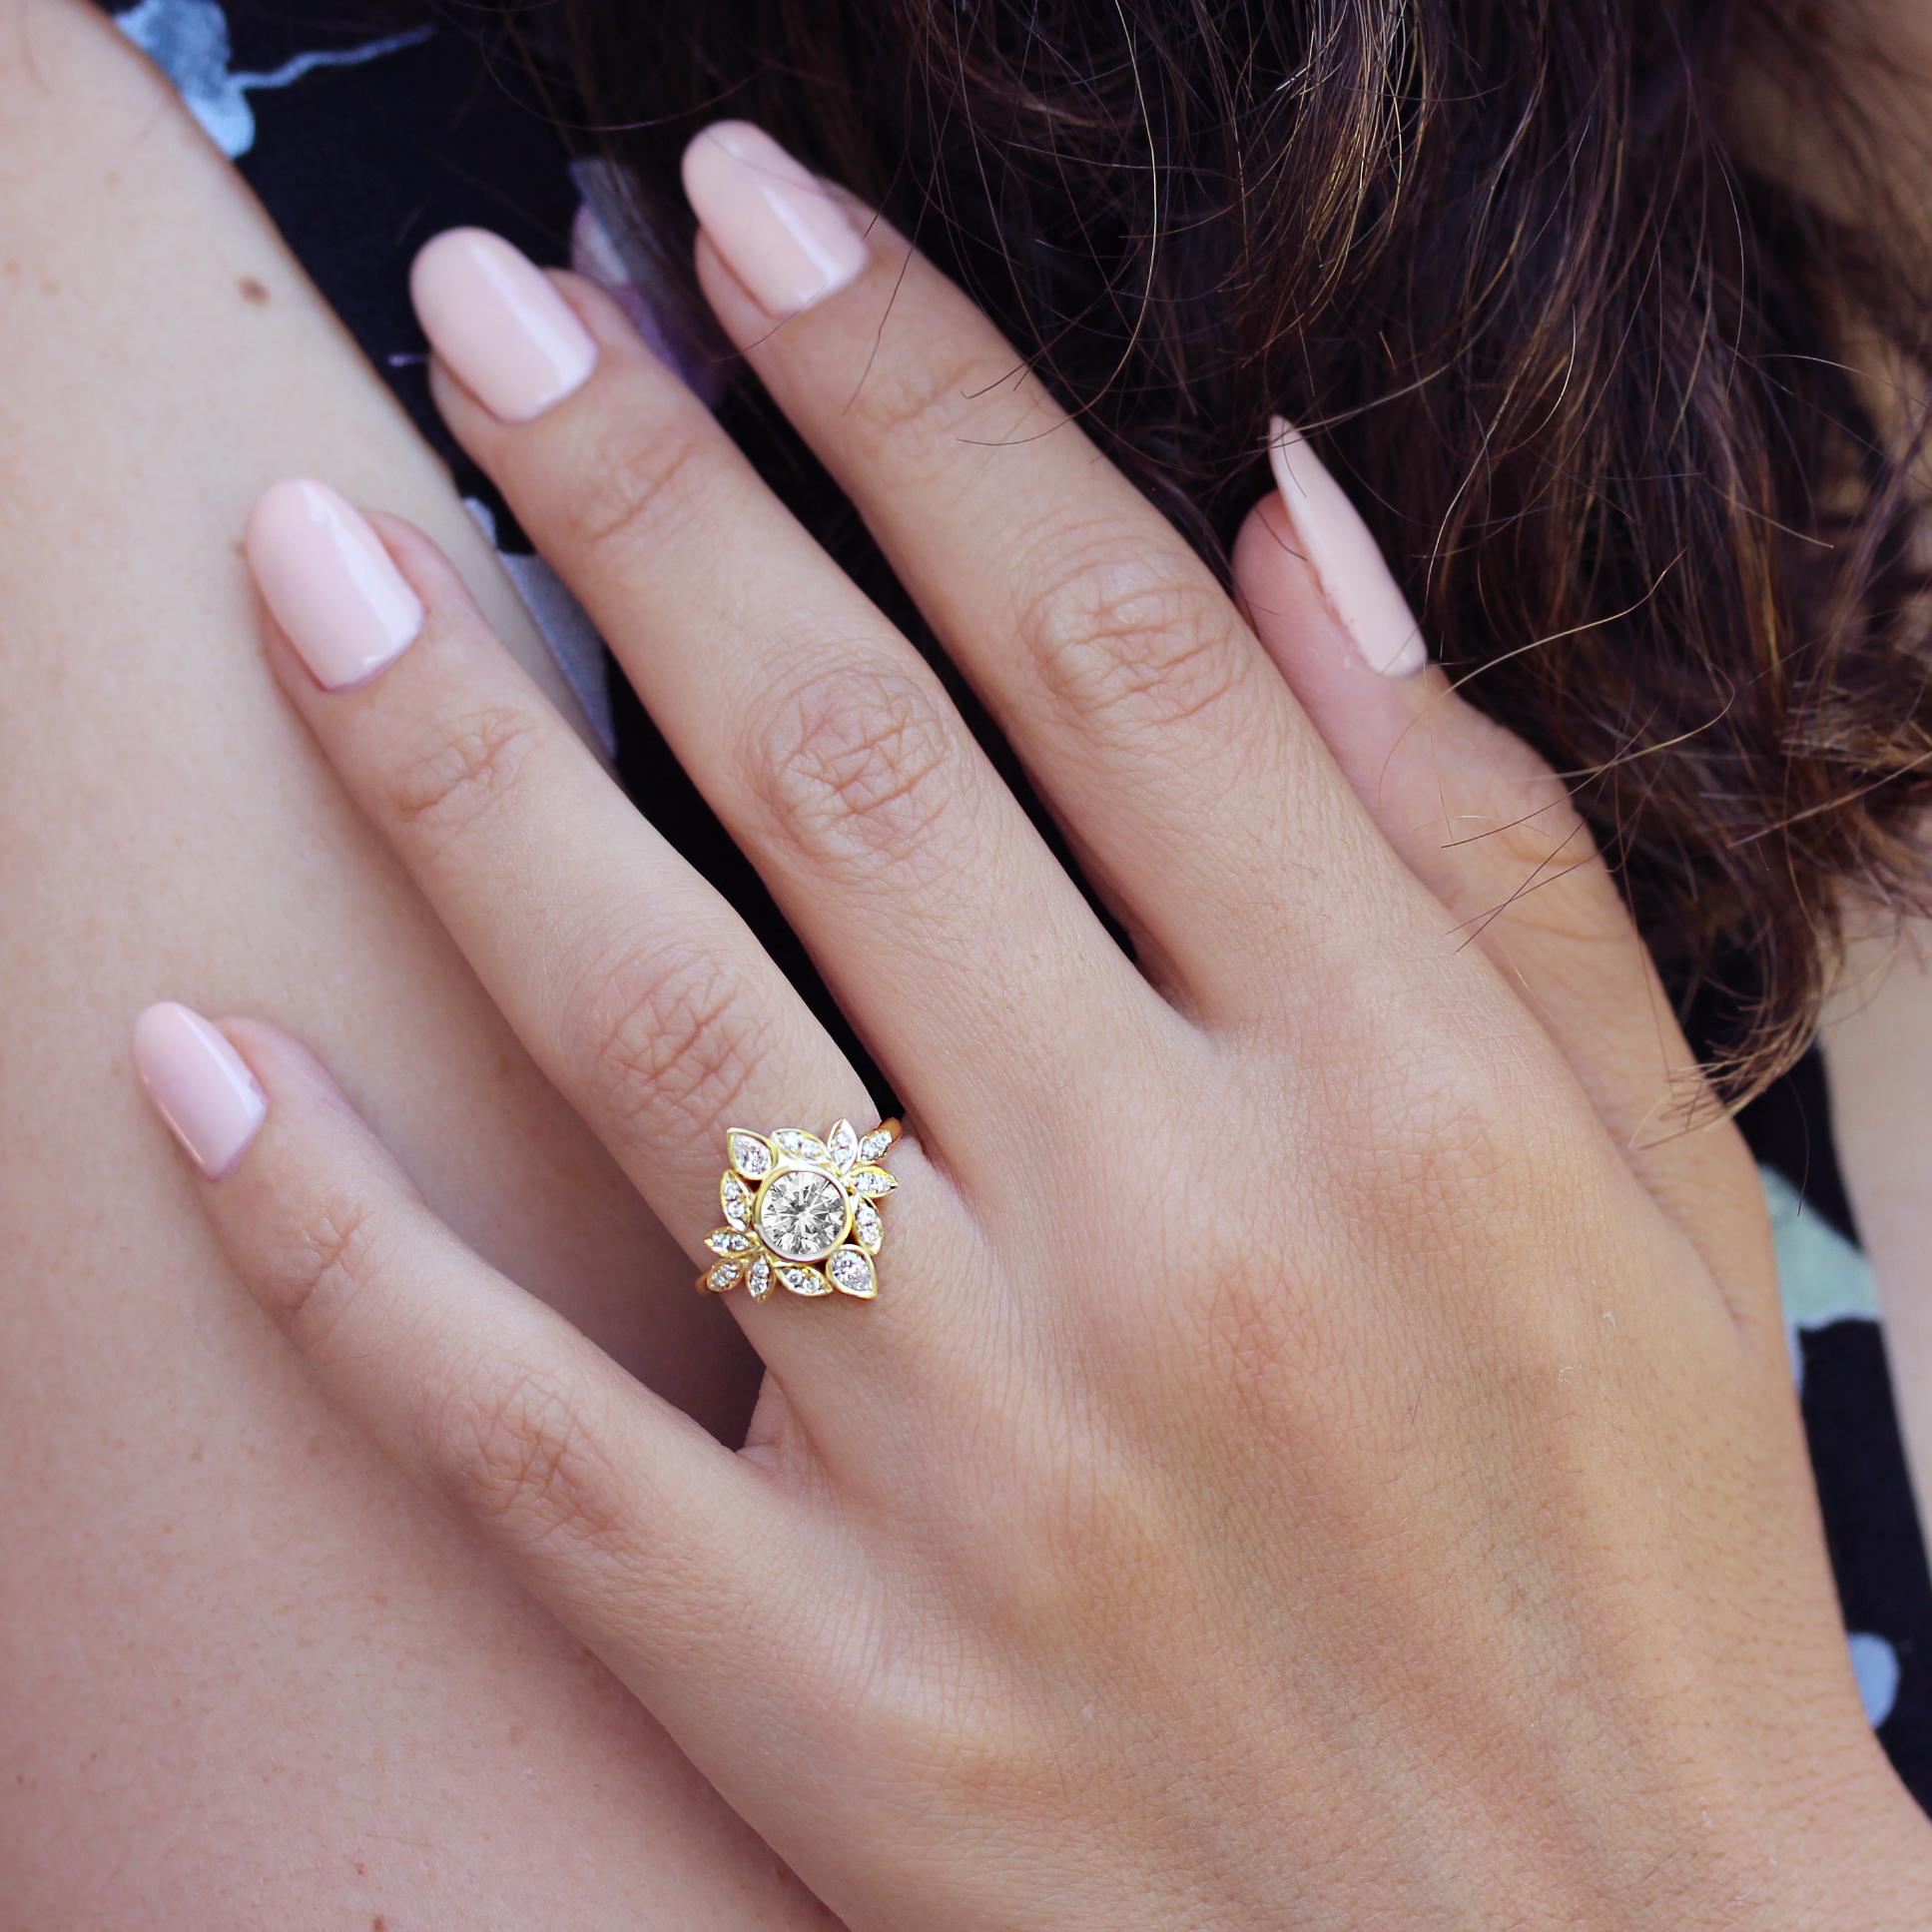 Unique Lily #5 Diamond Flower Engagement Ring.
